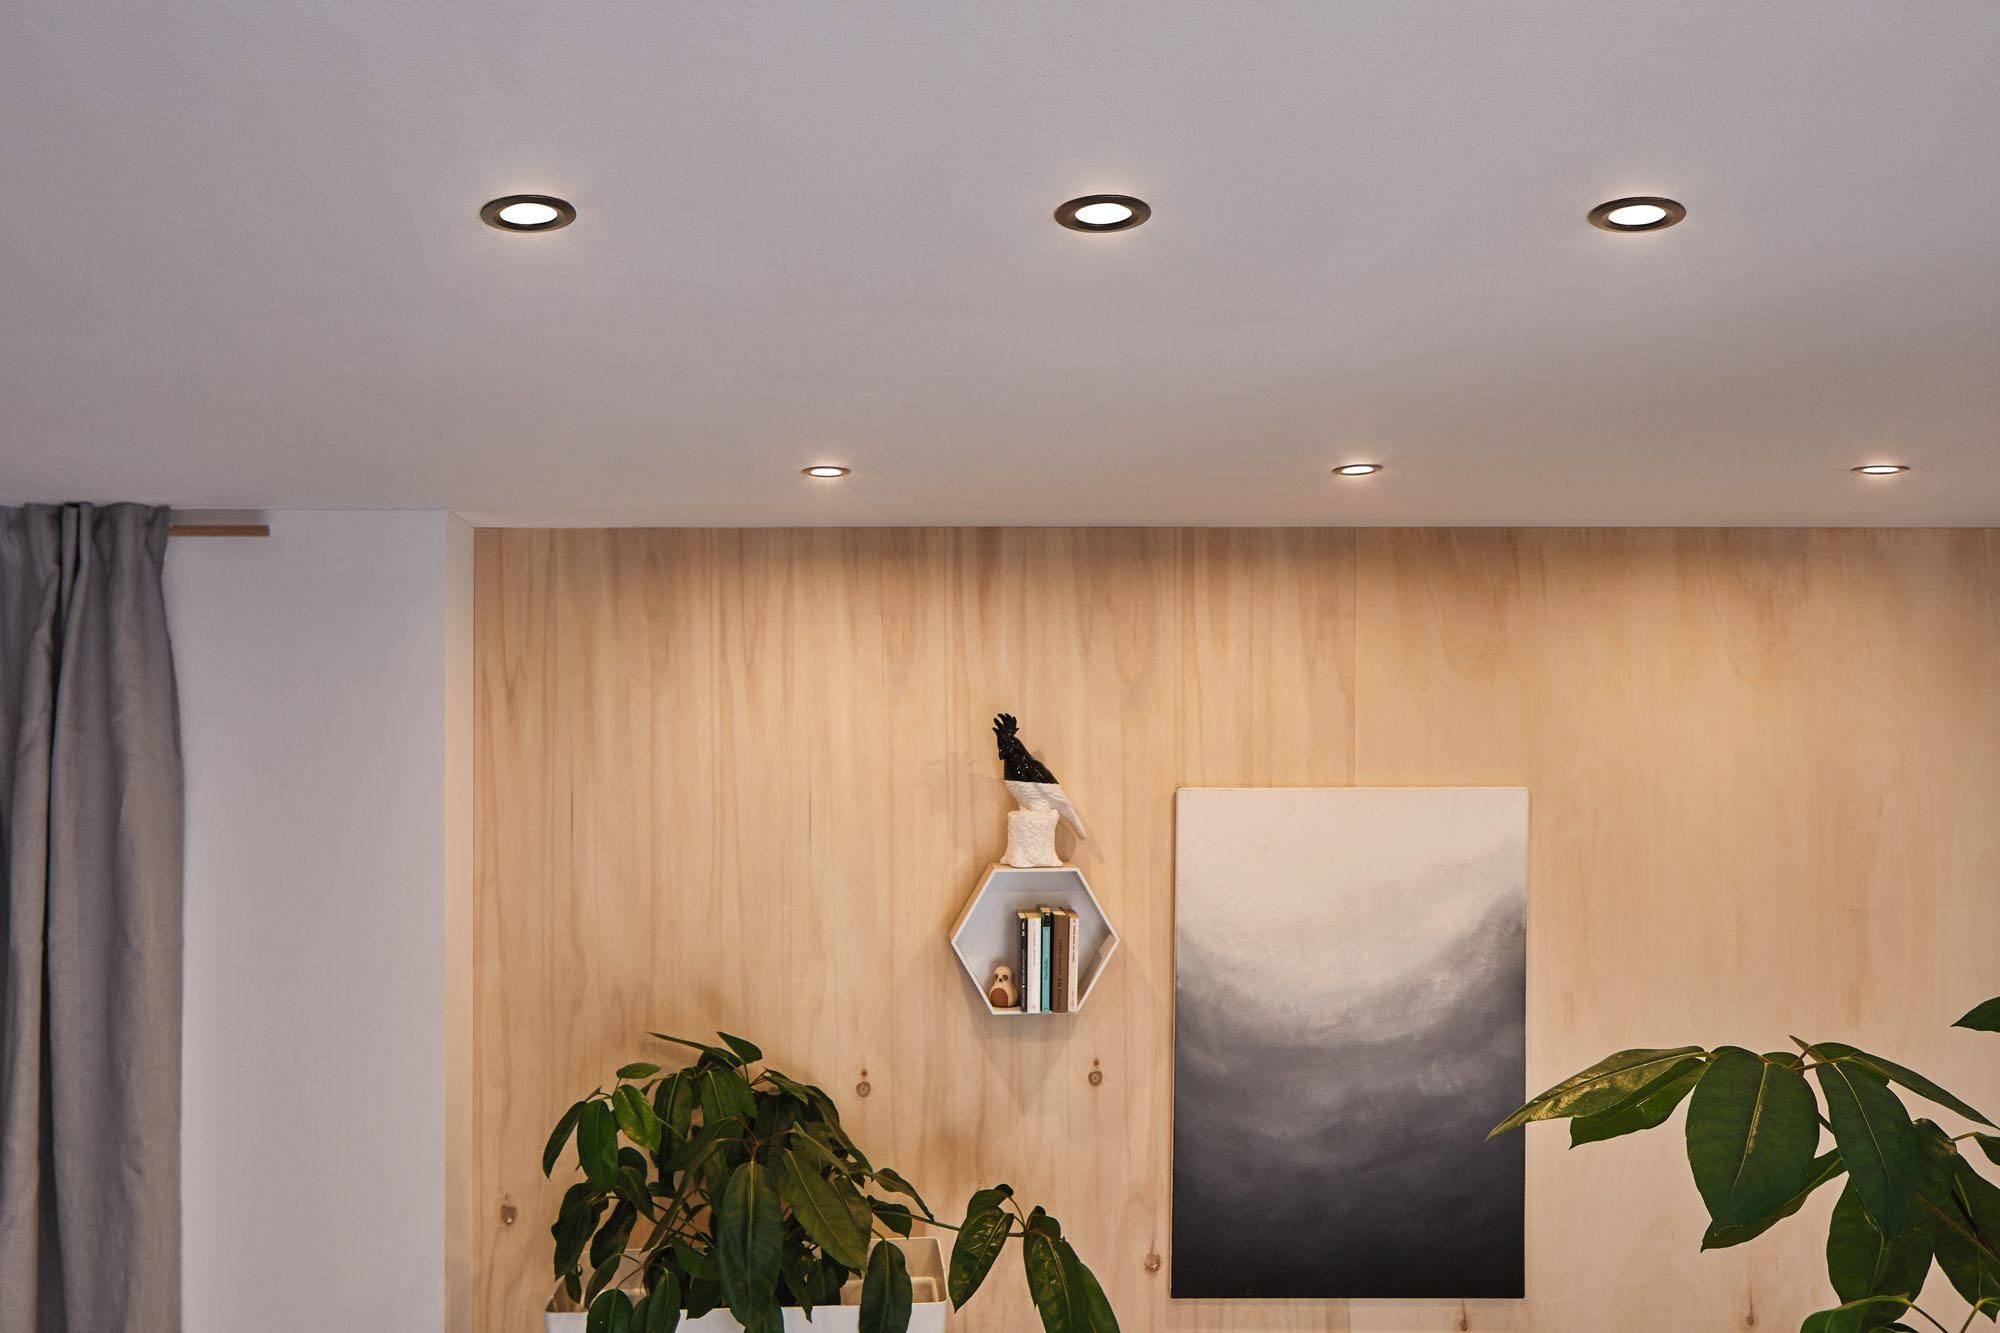 Paulmann LED LED-Modul, fest Calla, Deckenmontage LED Einbauleuchte Neutralweiß, integriert,